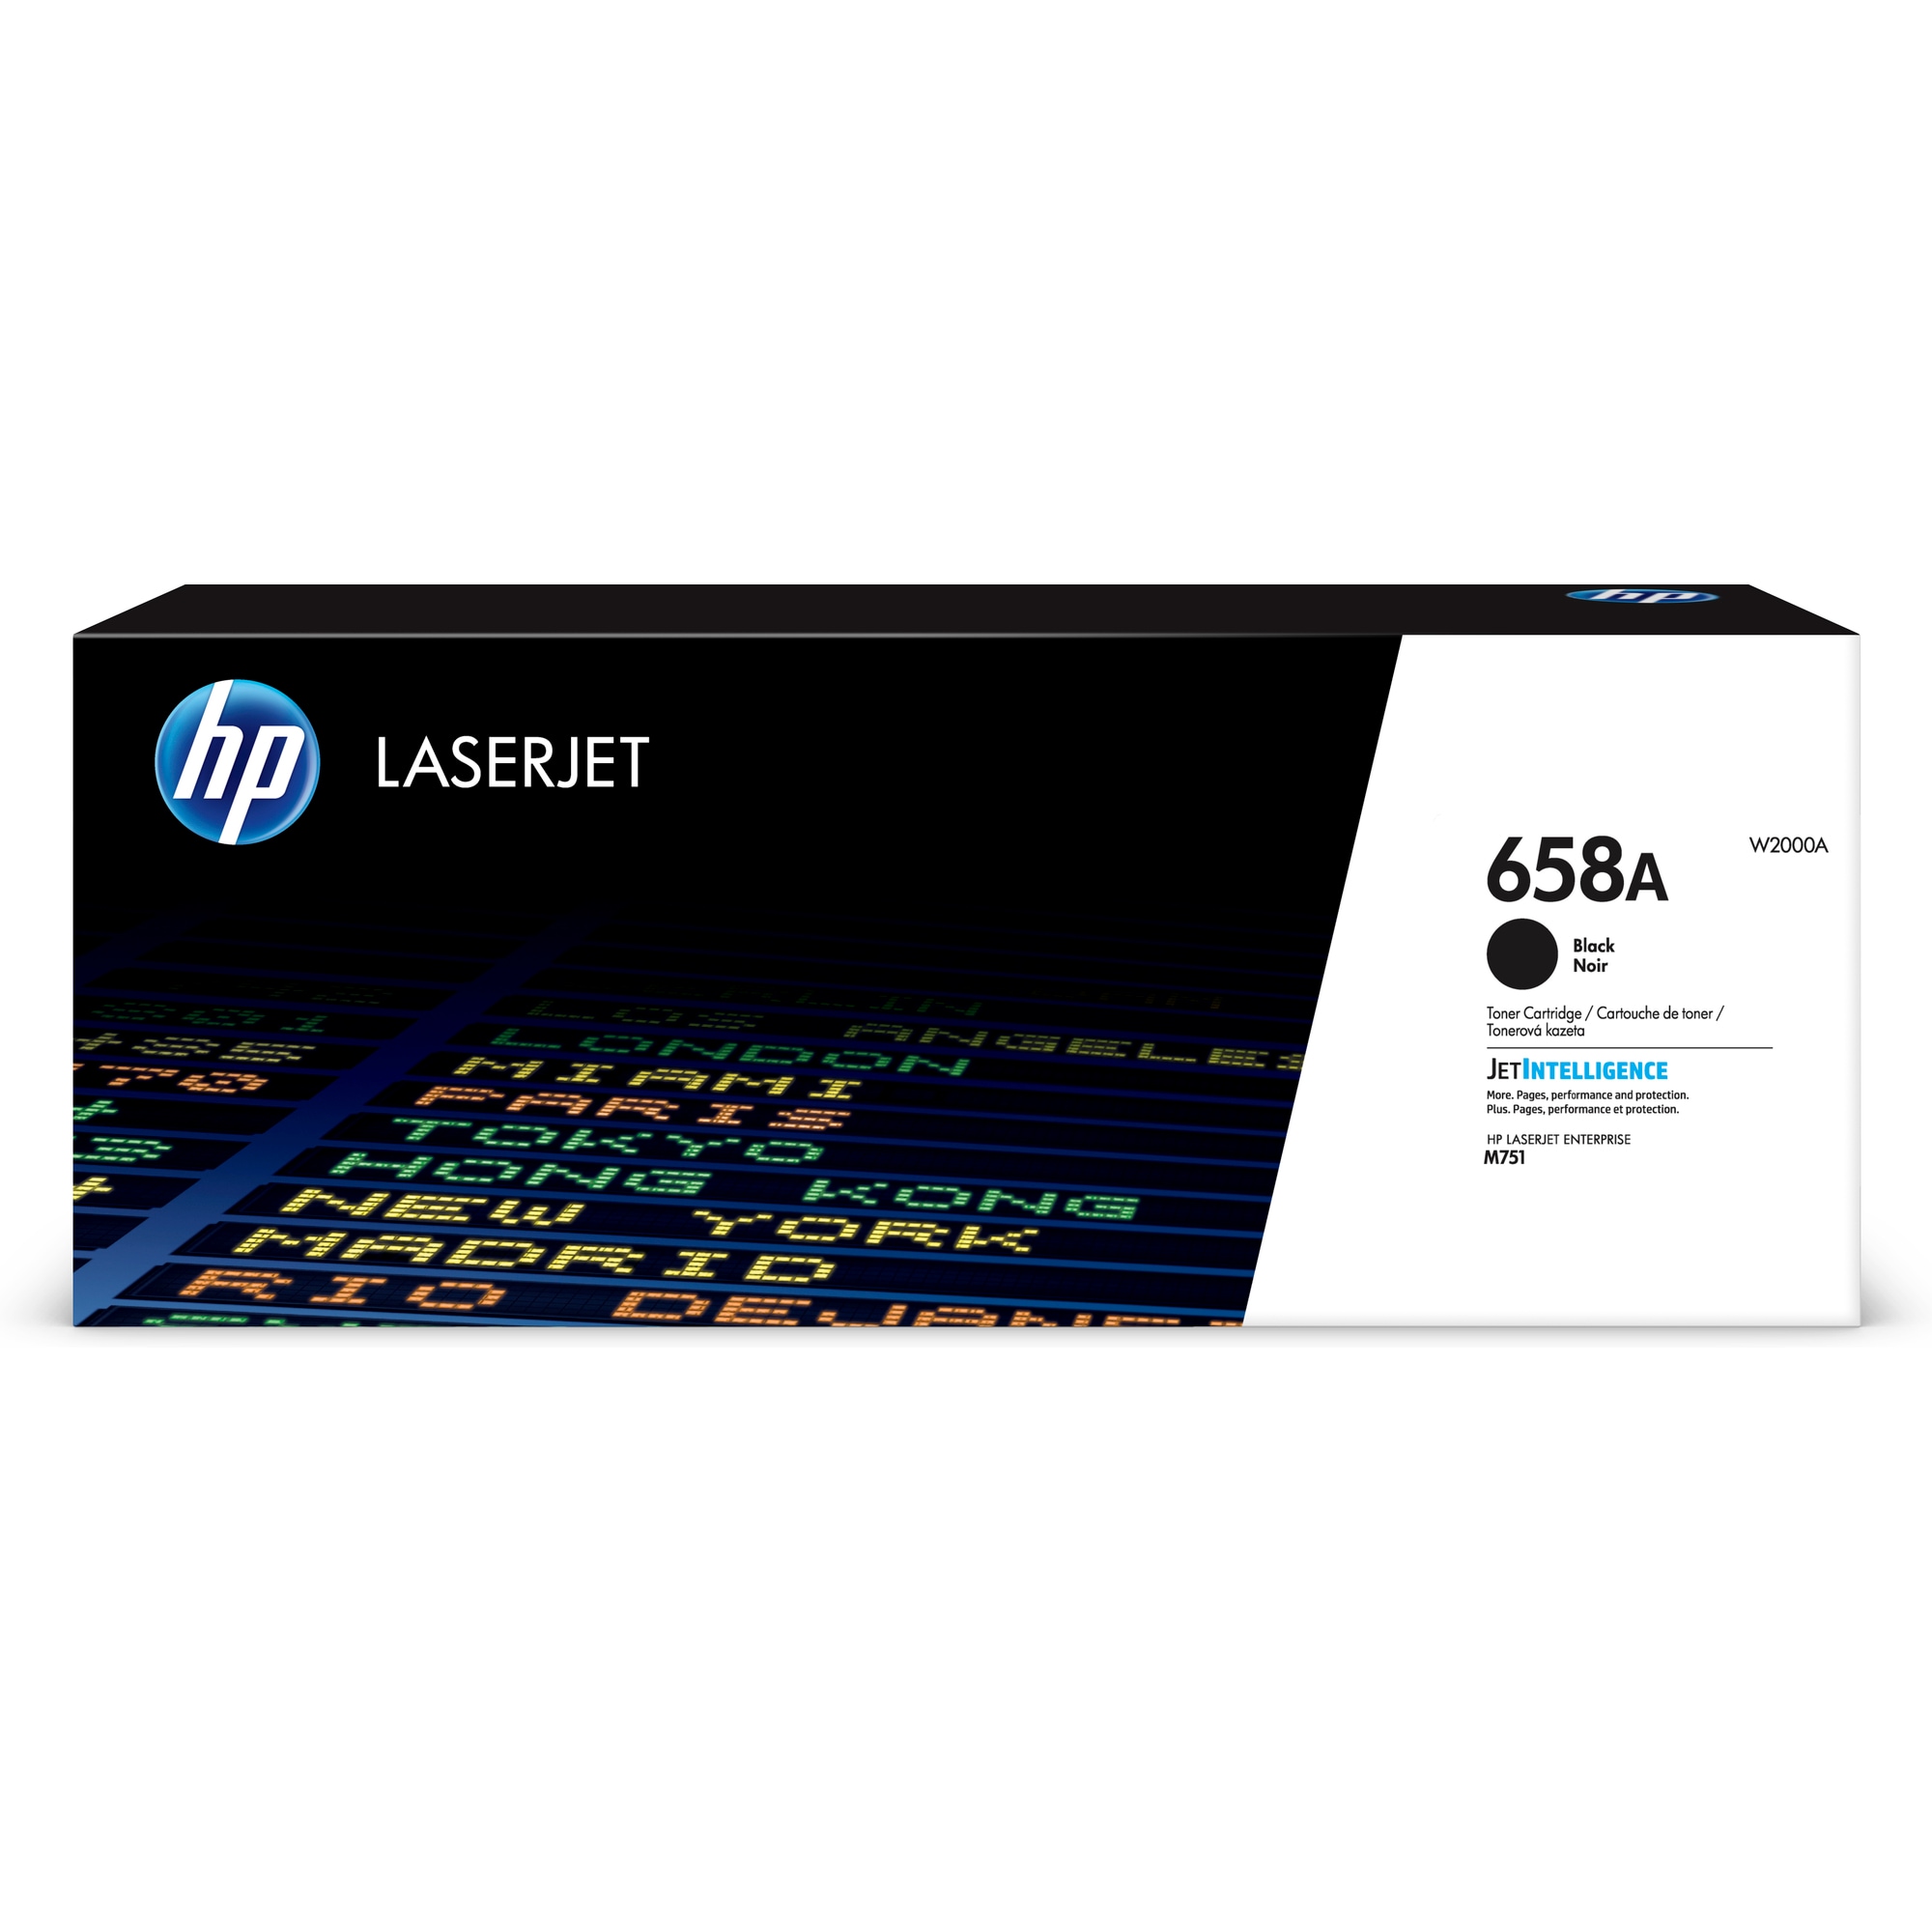 HP 658A Black LaserJet Toner Cartridge (7,000 pages)0 